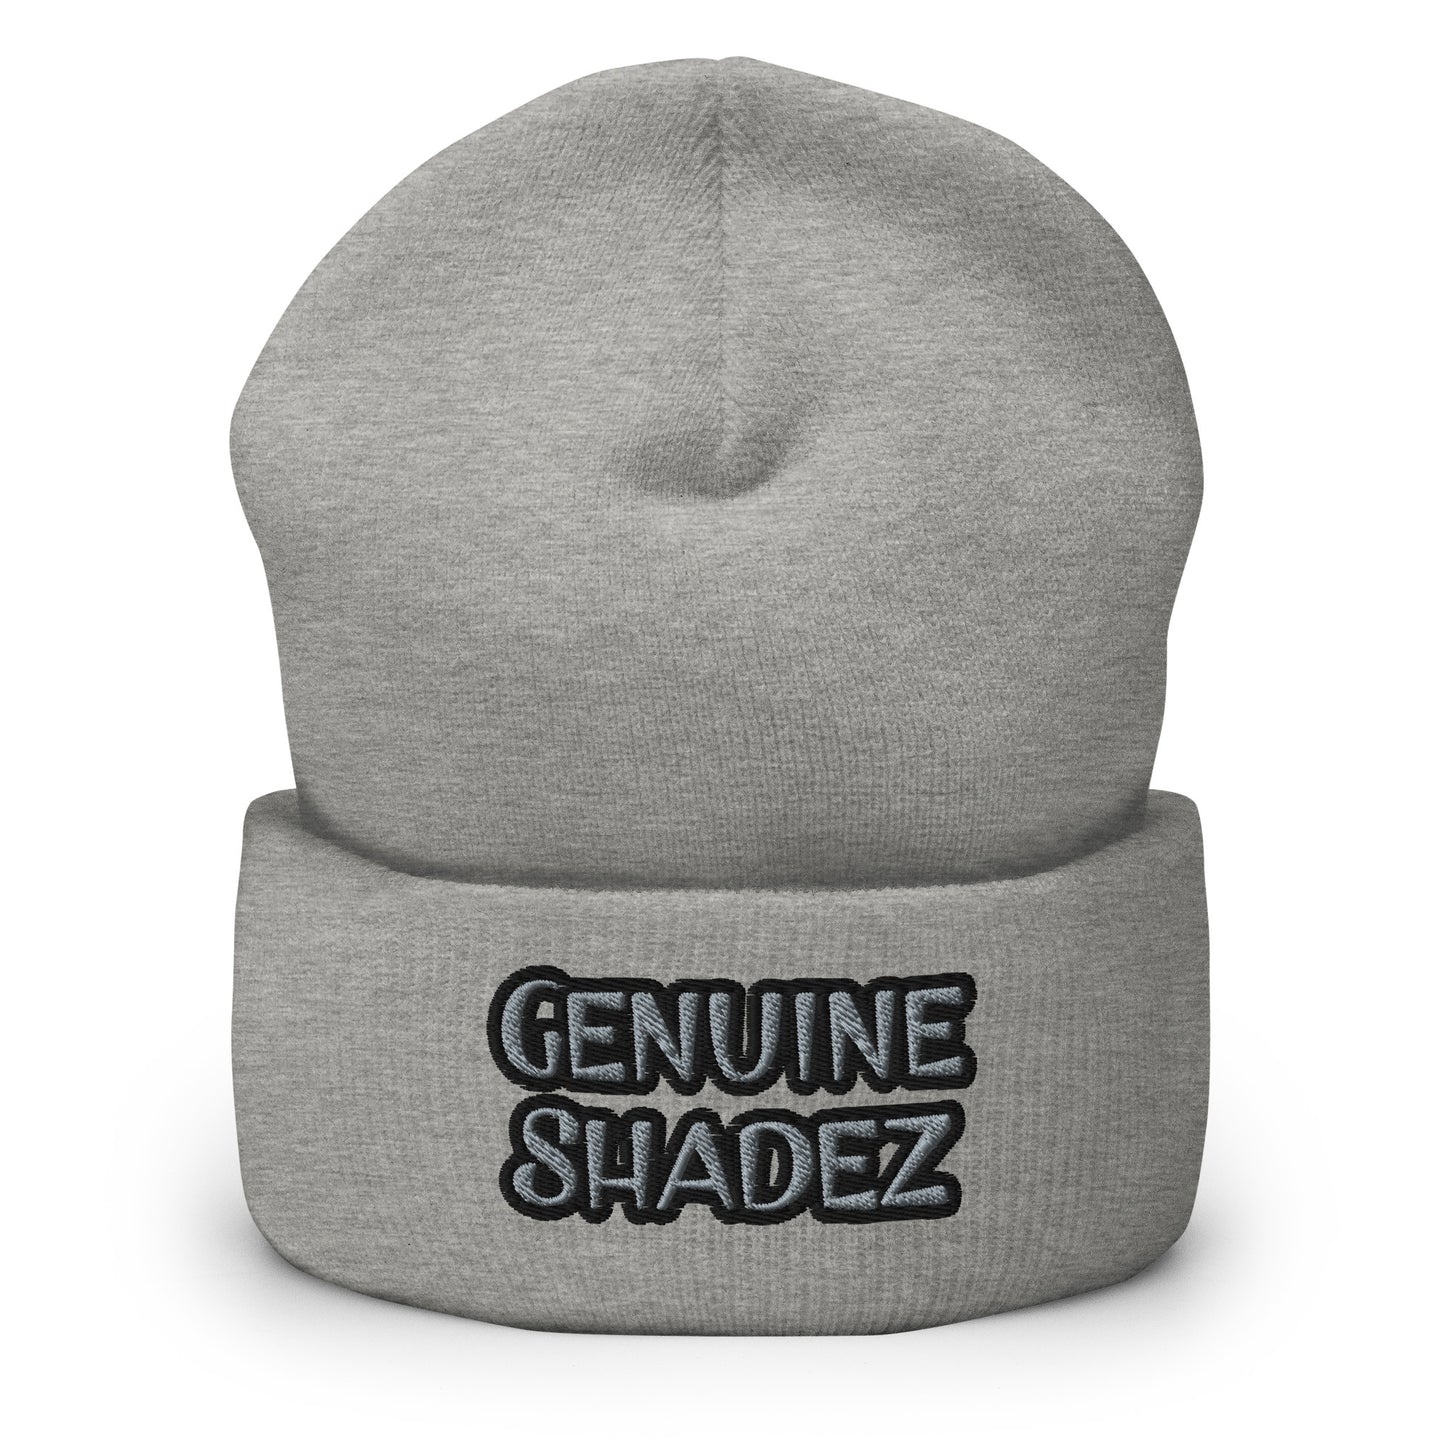 Genuine Shadez, grey - Cuffed Beanie